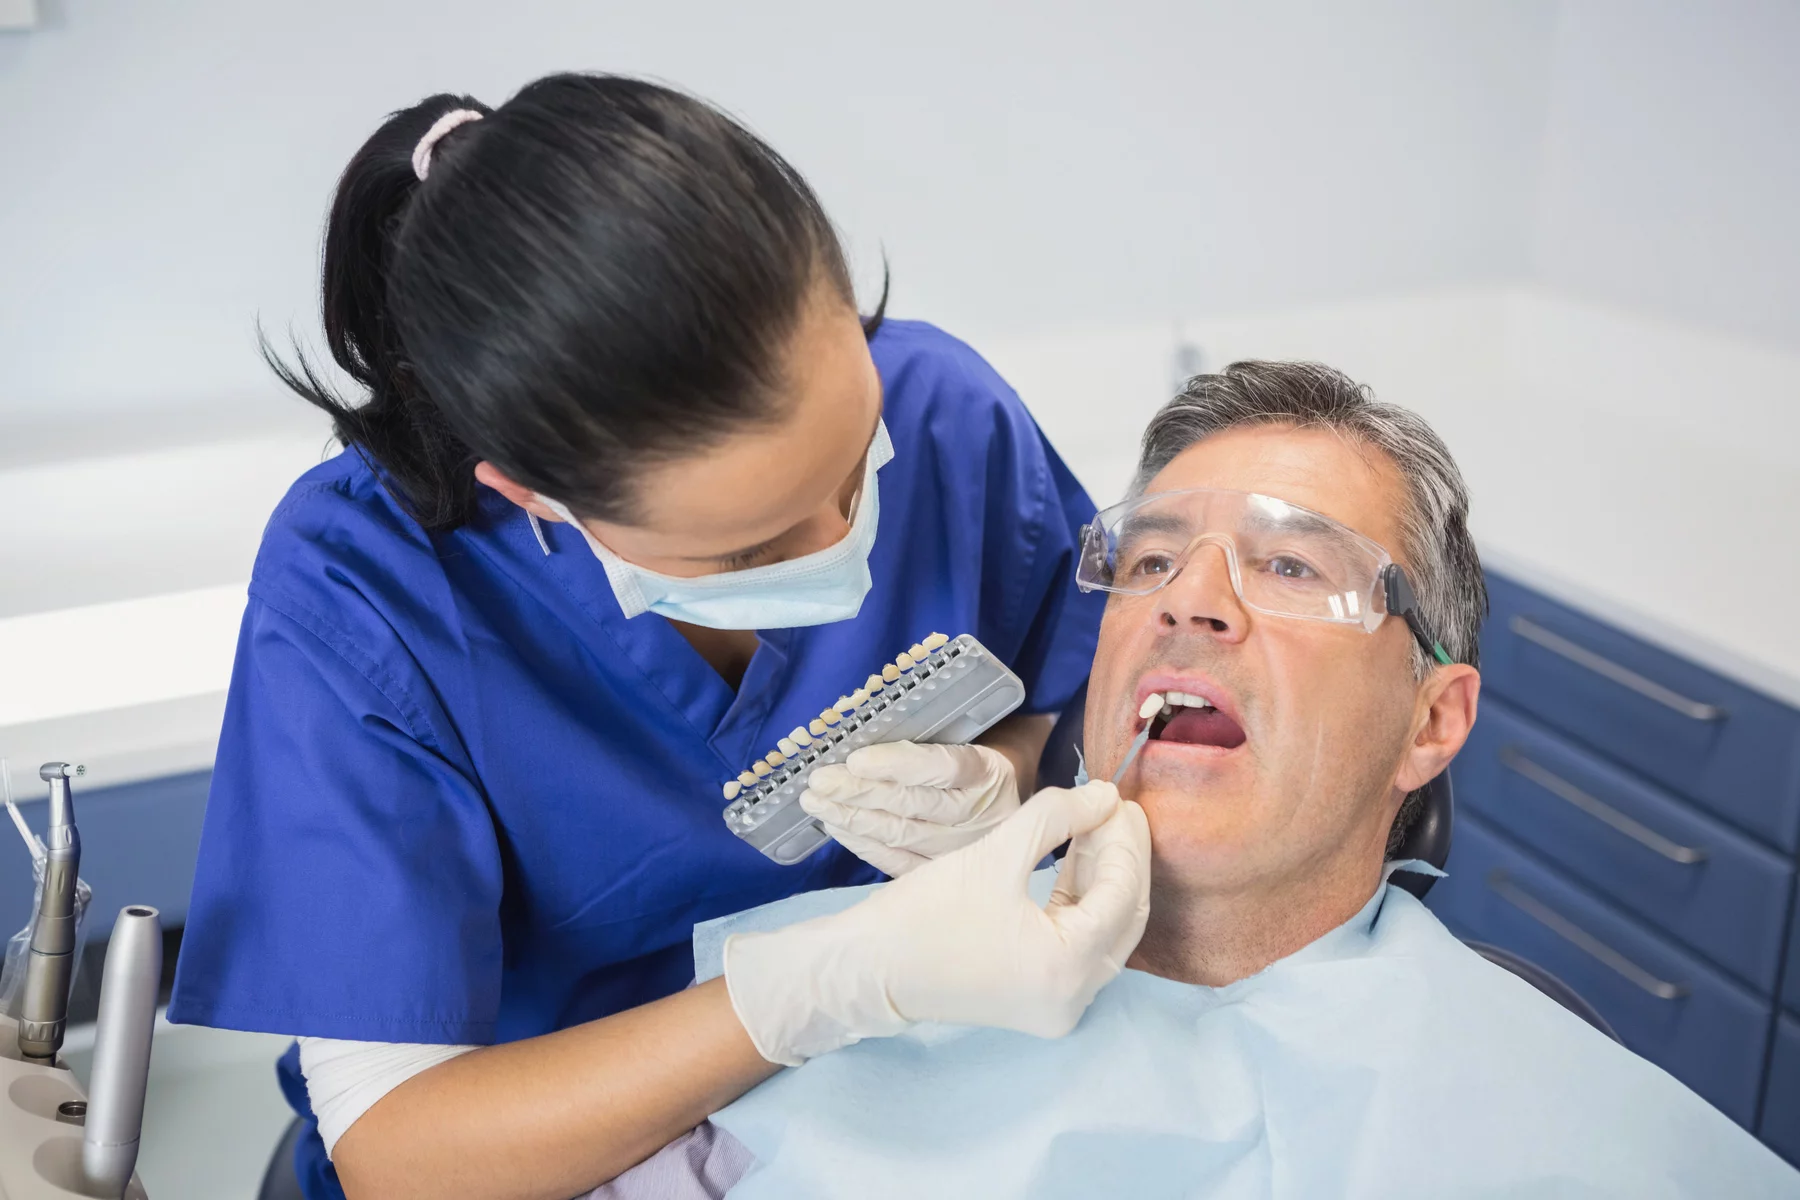 Dentist performing cosmetic dentistry